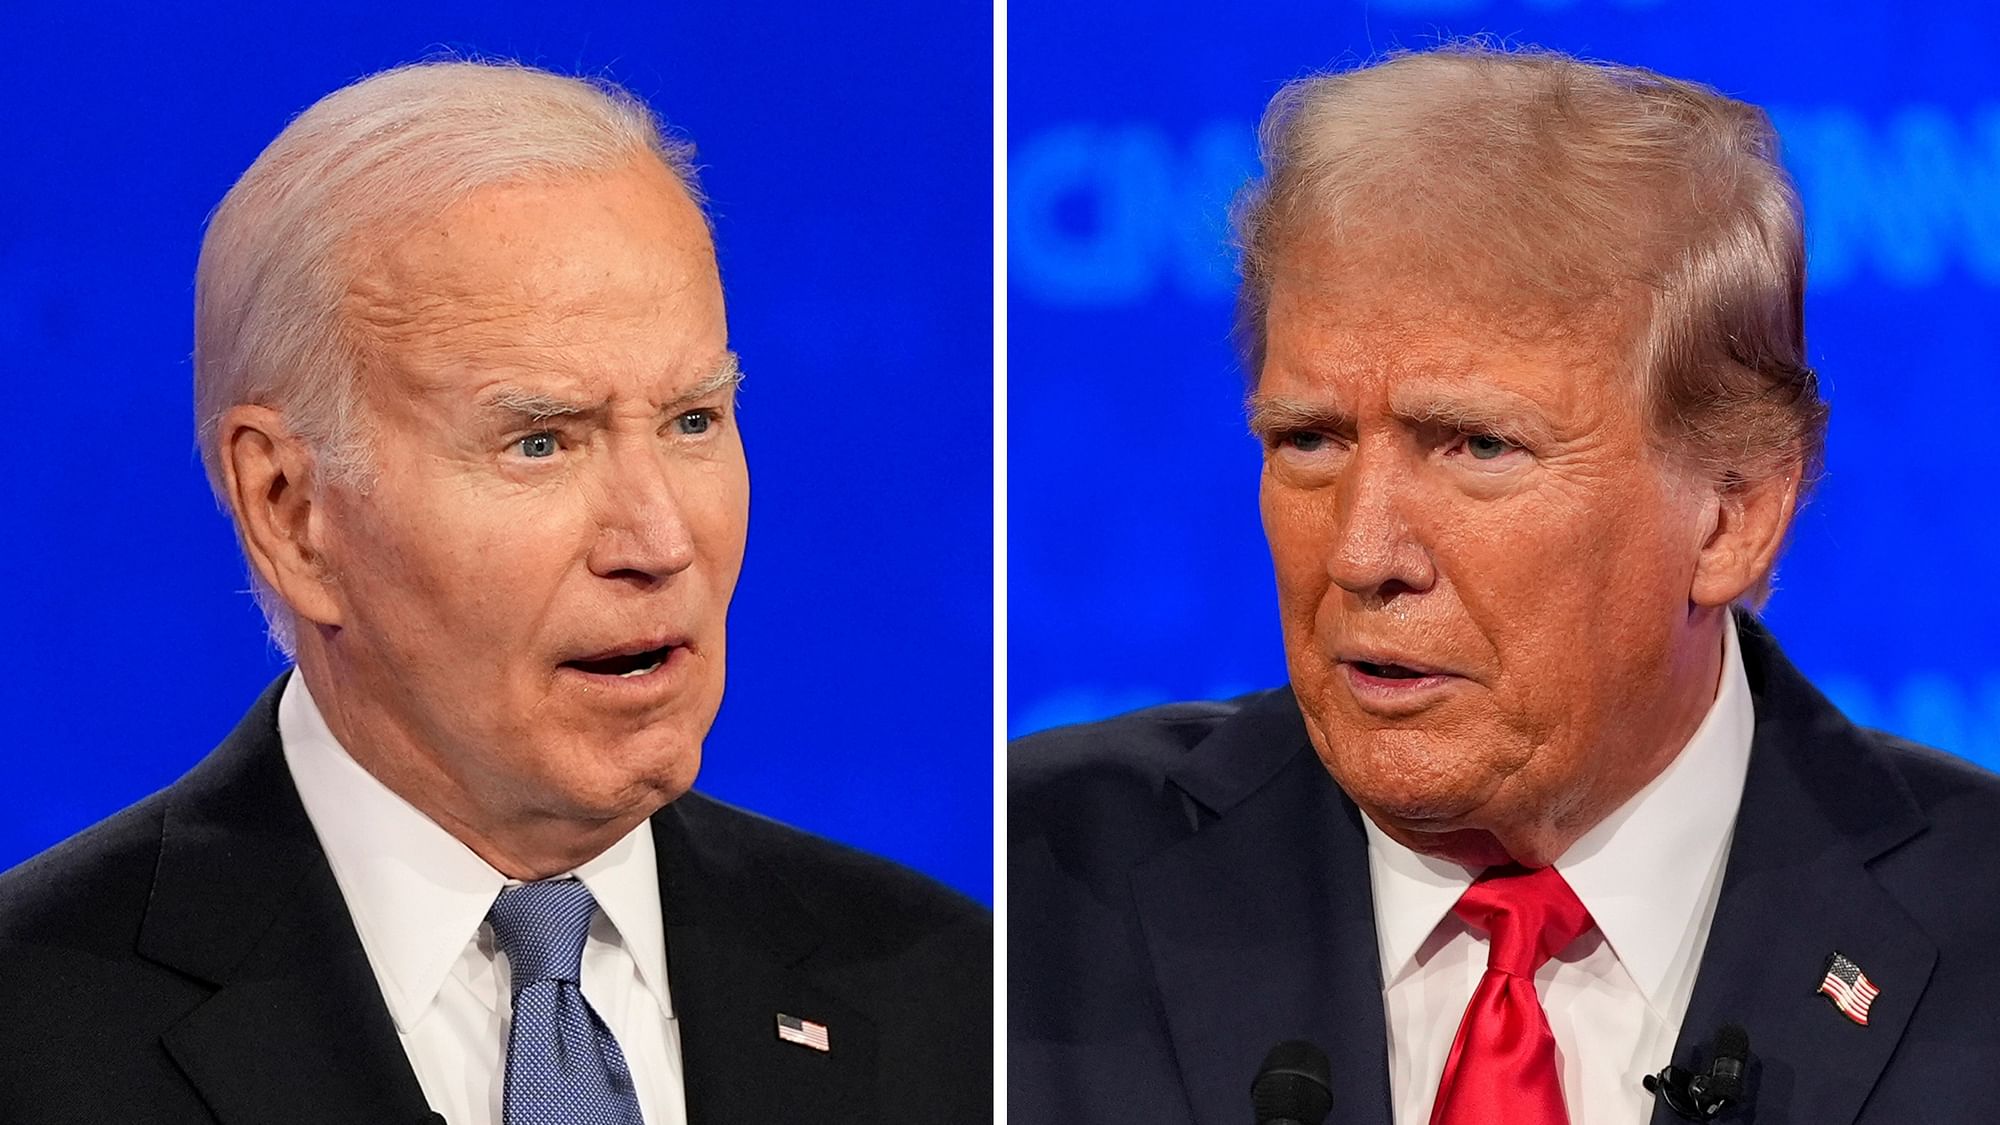 <div class="paragraphs"><p>Joe Biden (left) and Donald Trump during the US presidential debate on Thursday, 27 June.&nbsp;</p></div>